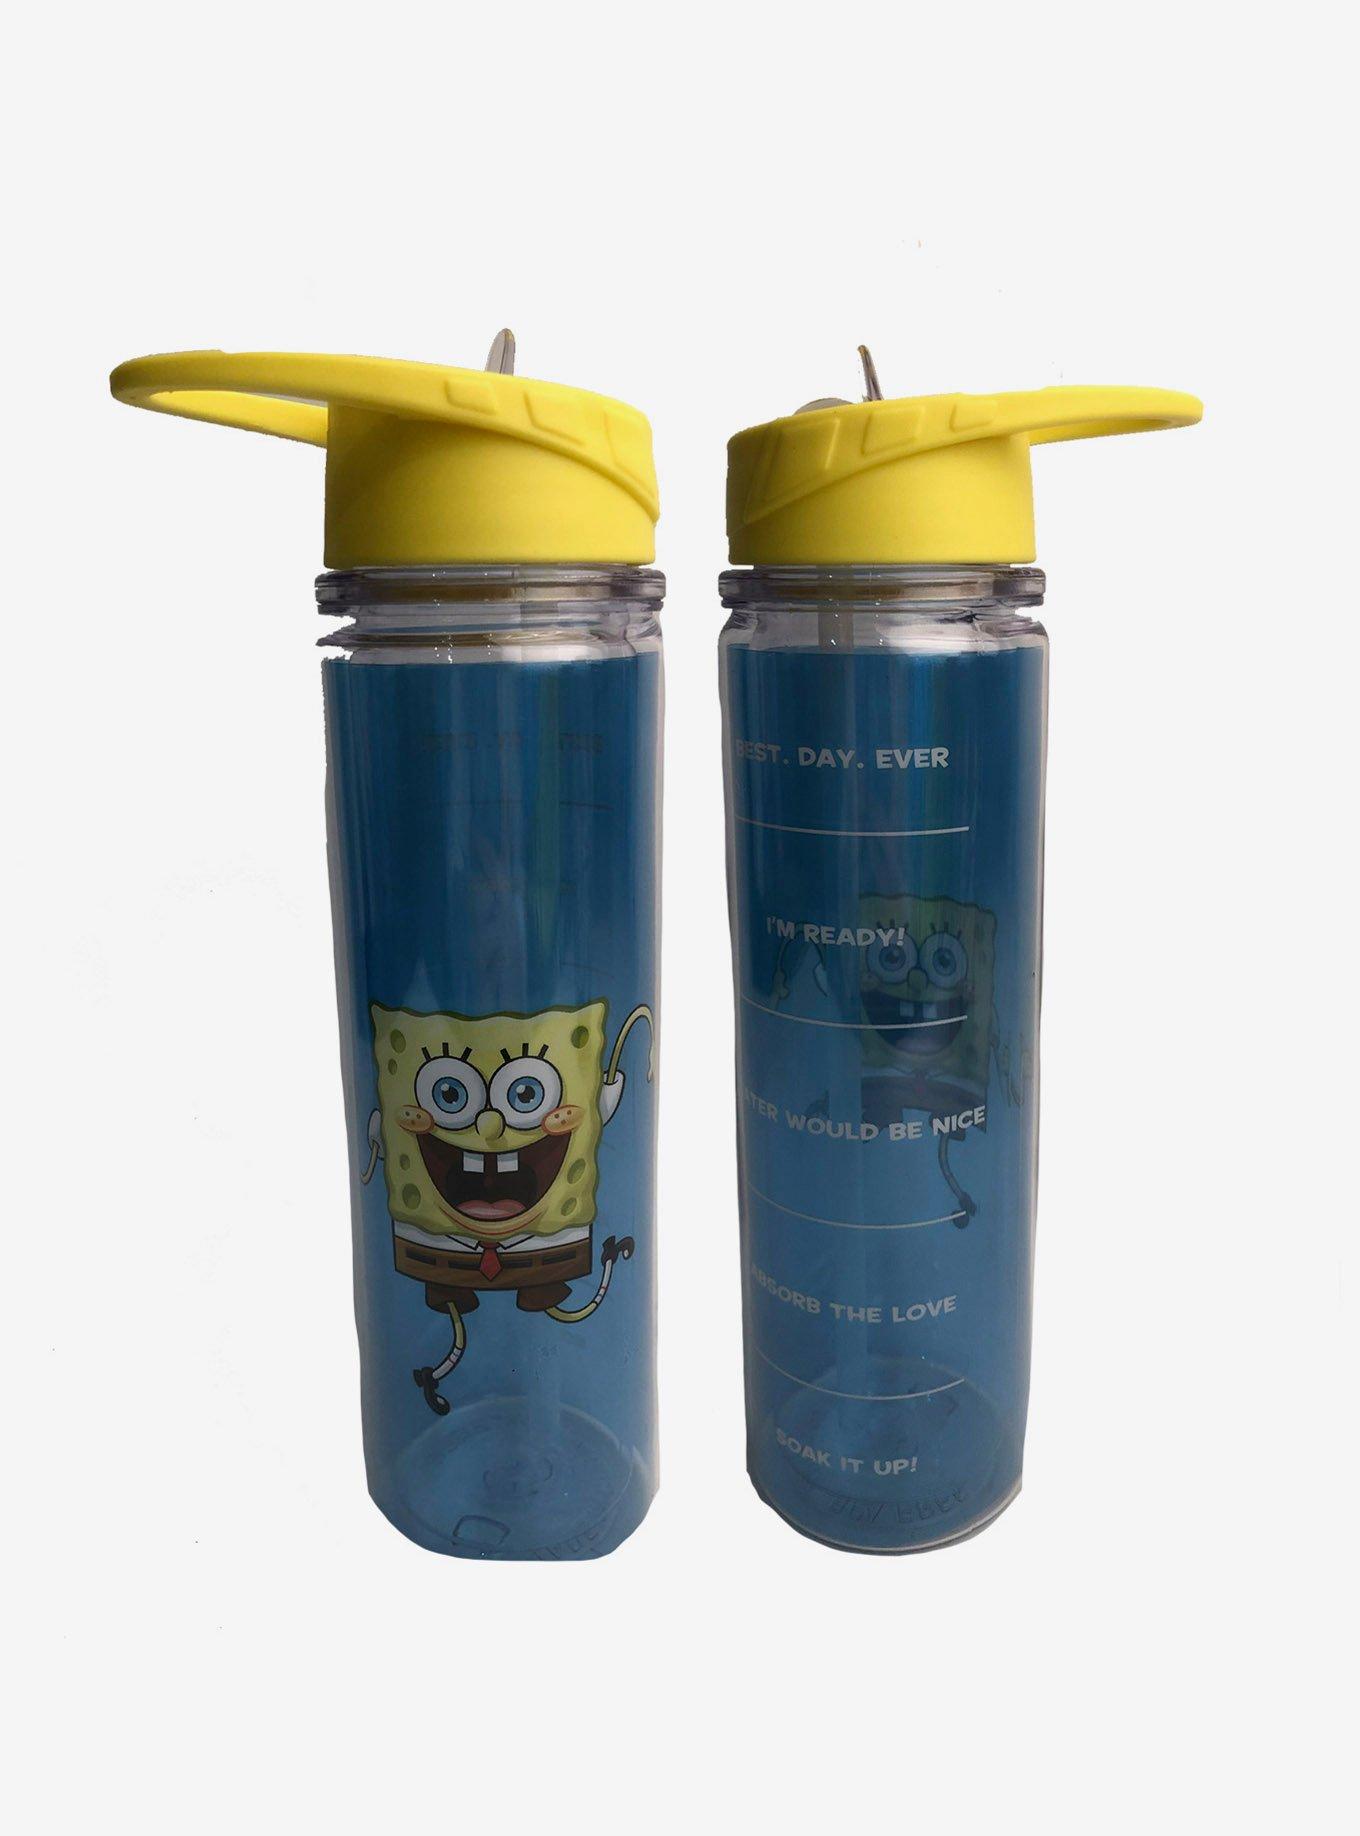 Spongebob Squarepants Measurement Water Bottle